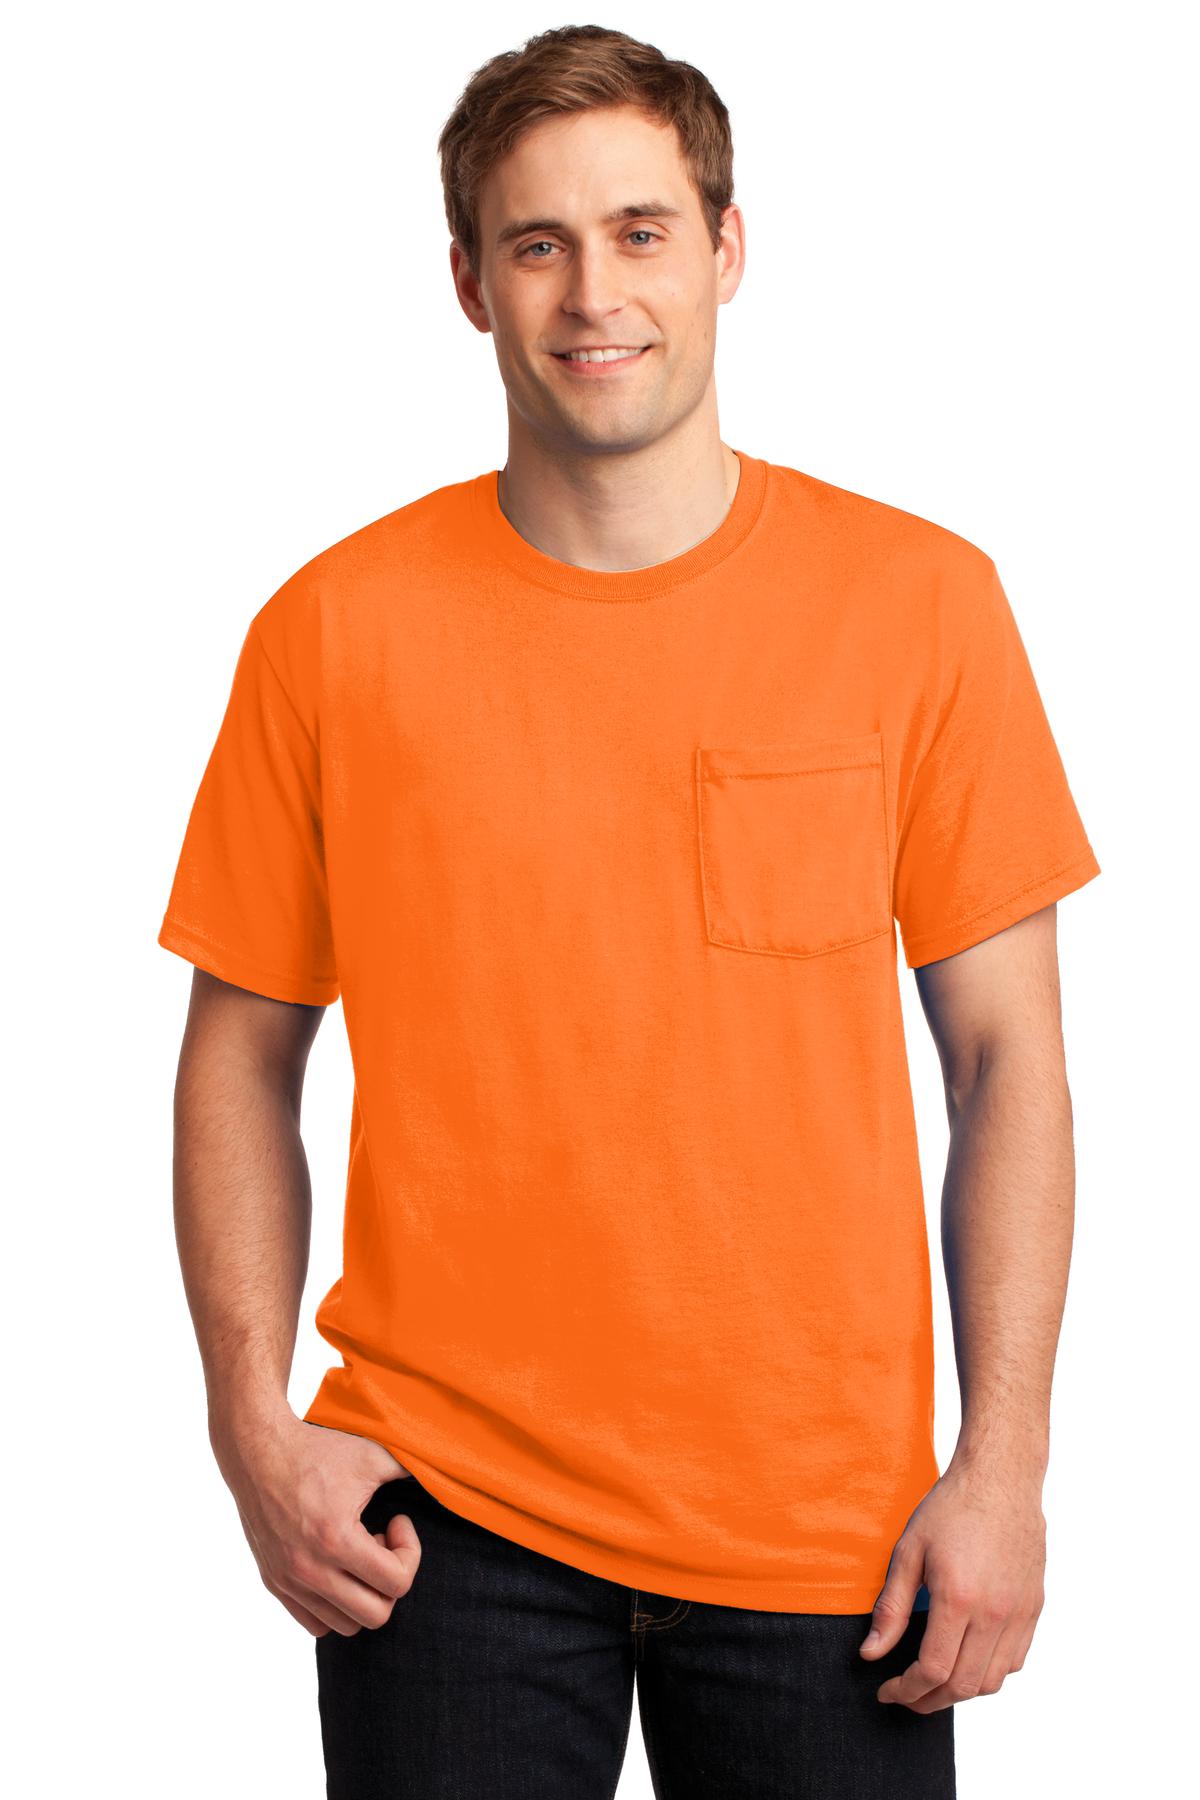 JERZEES® - Dri-Power® 50/50 Cotton/Poly Pocket T-Shirt. 29MP [Safety Orange] - DFW Impression